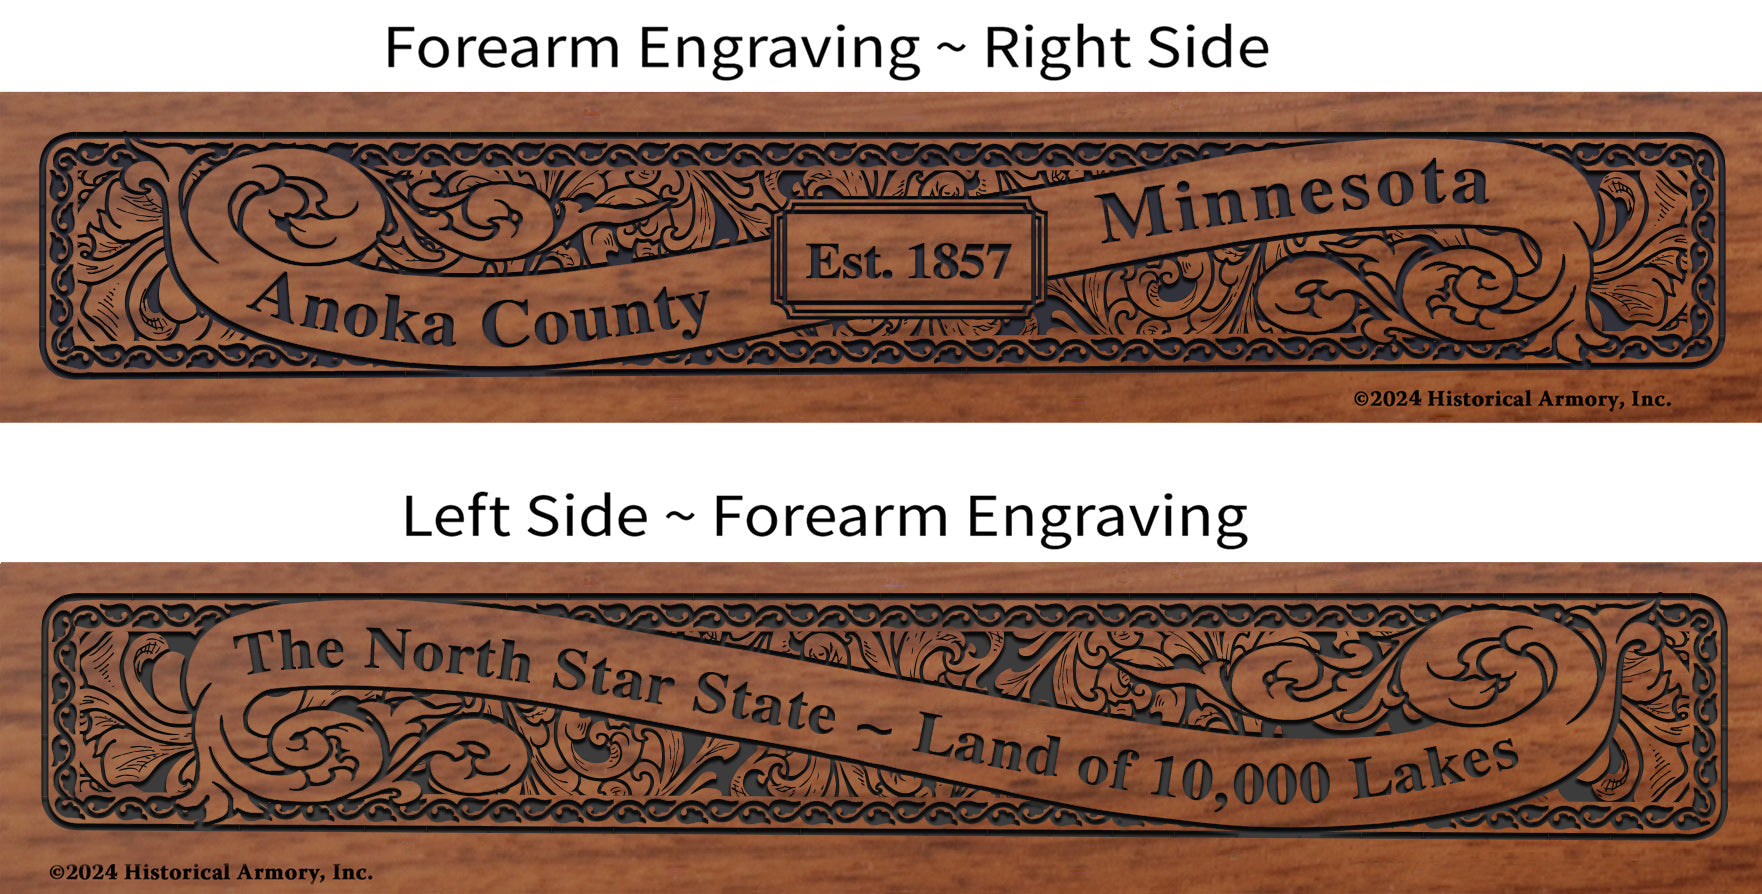 Anoka County Minnesota Engraved Rifle Forearm